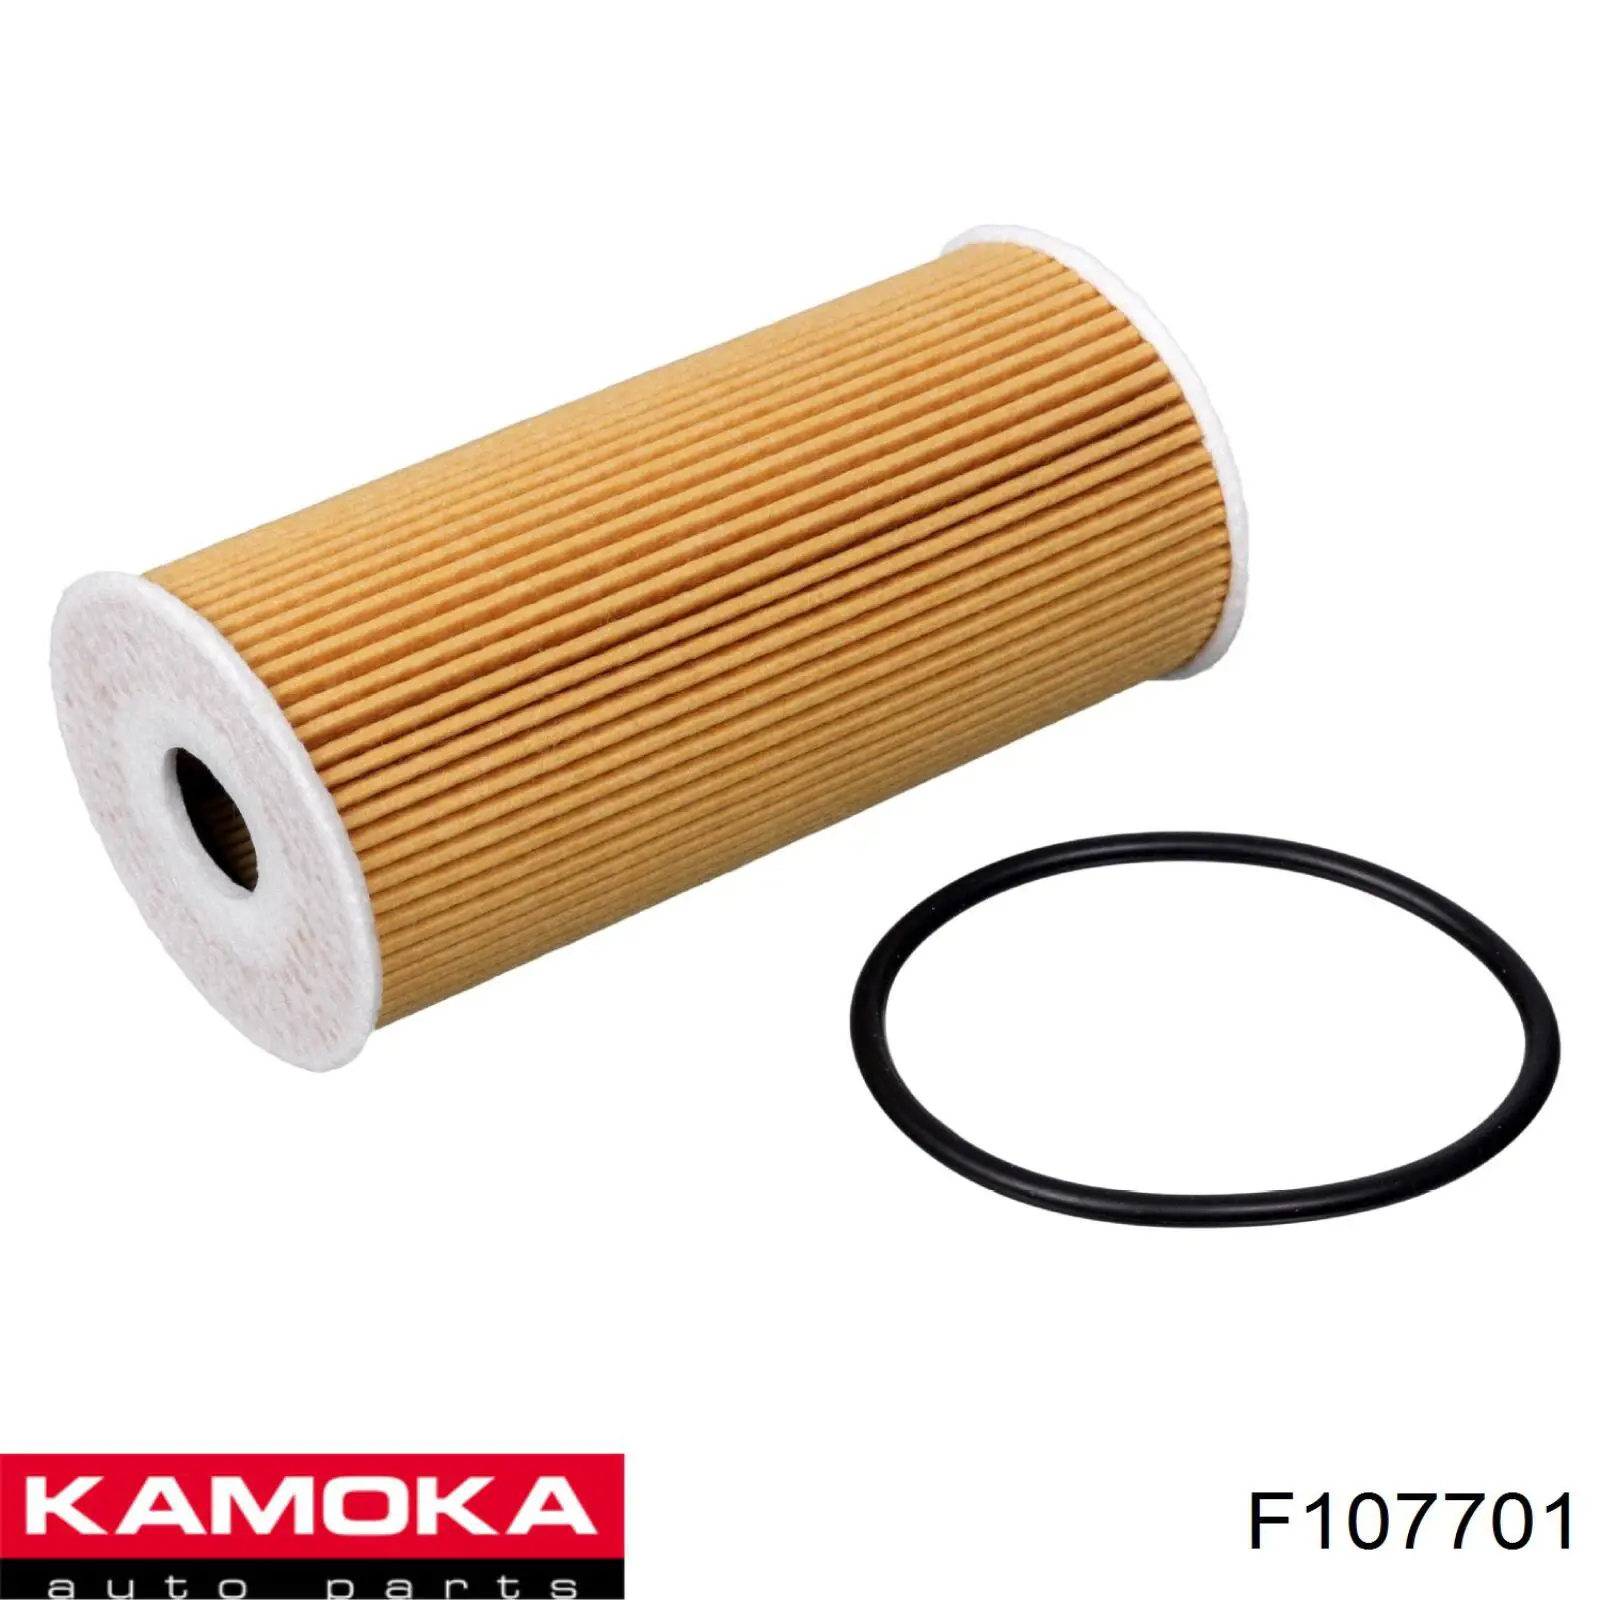 F107701 Kamoka filtro de aceite